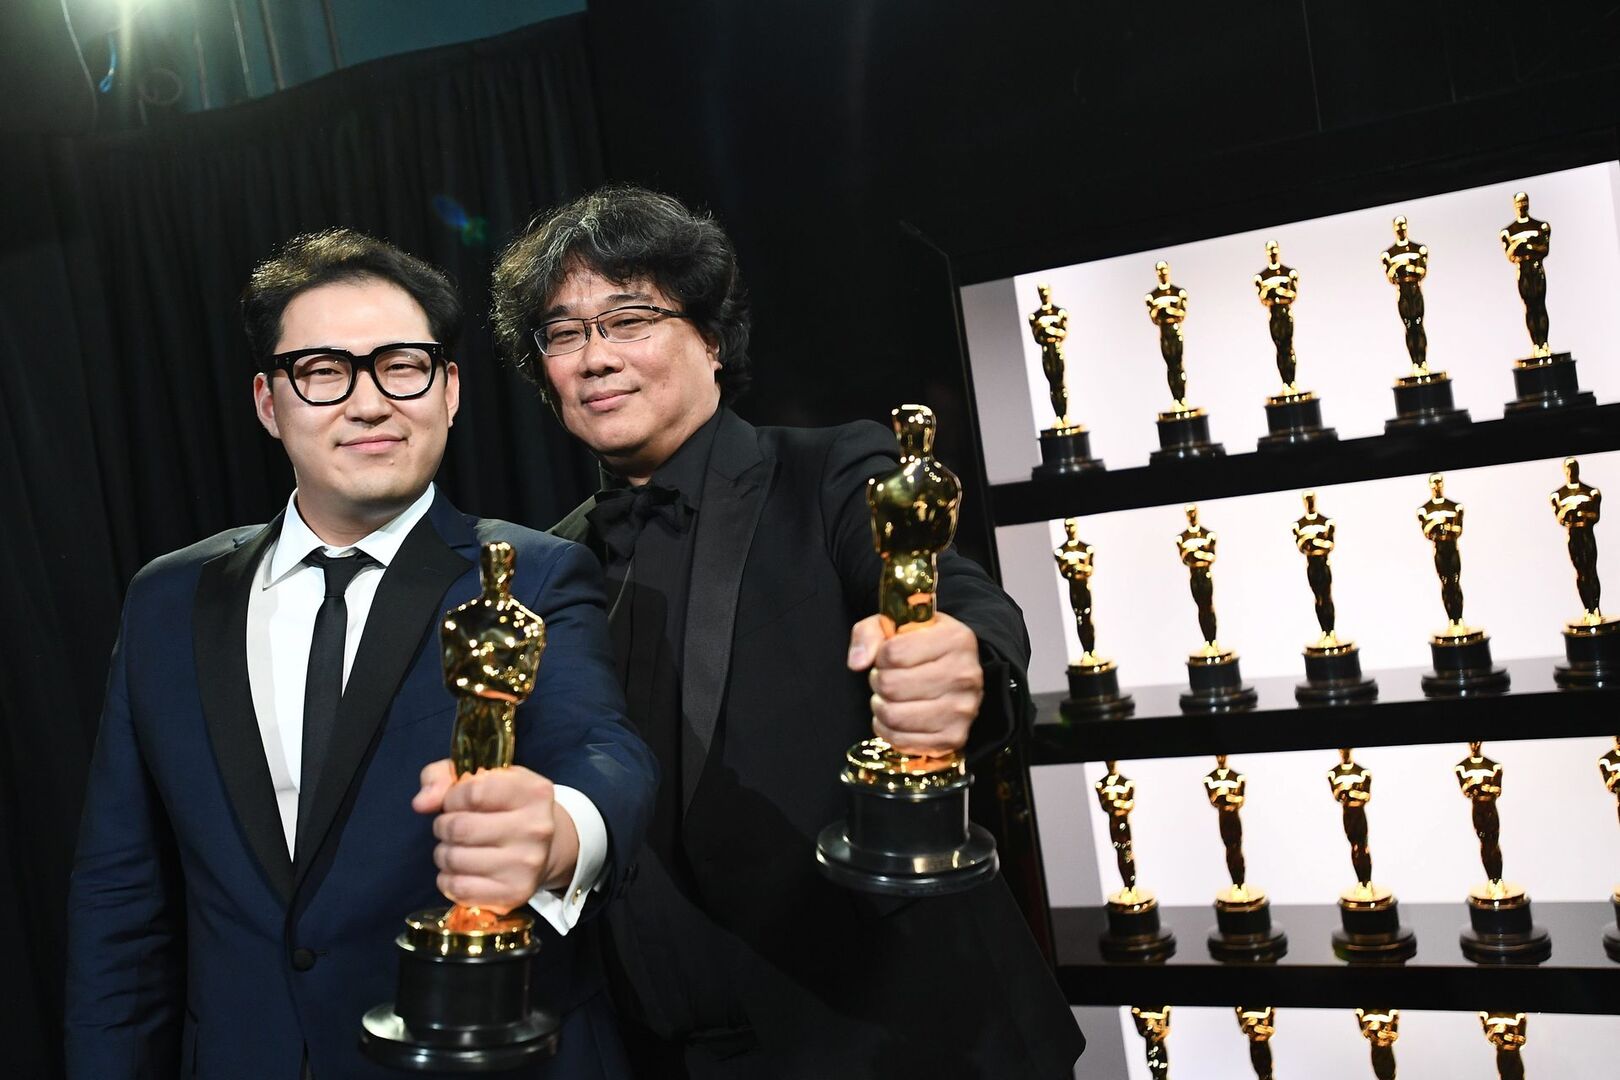 Номер оскара. Пон Чжун Хо Оскар. Пон Чжун Хо паразиты. Киноакадемия Оскар. Церемония вручения кинопремии «Оскар».